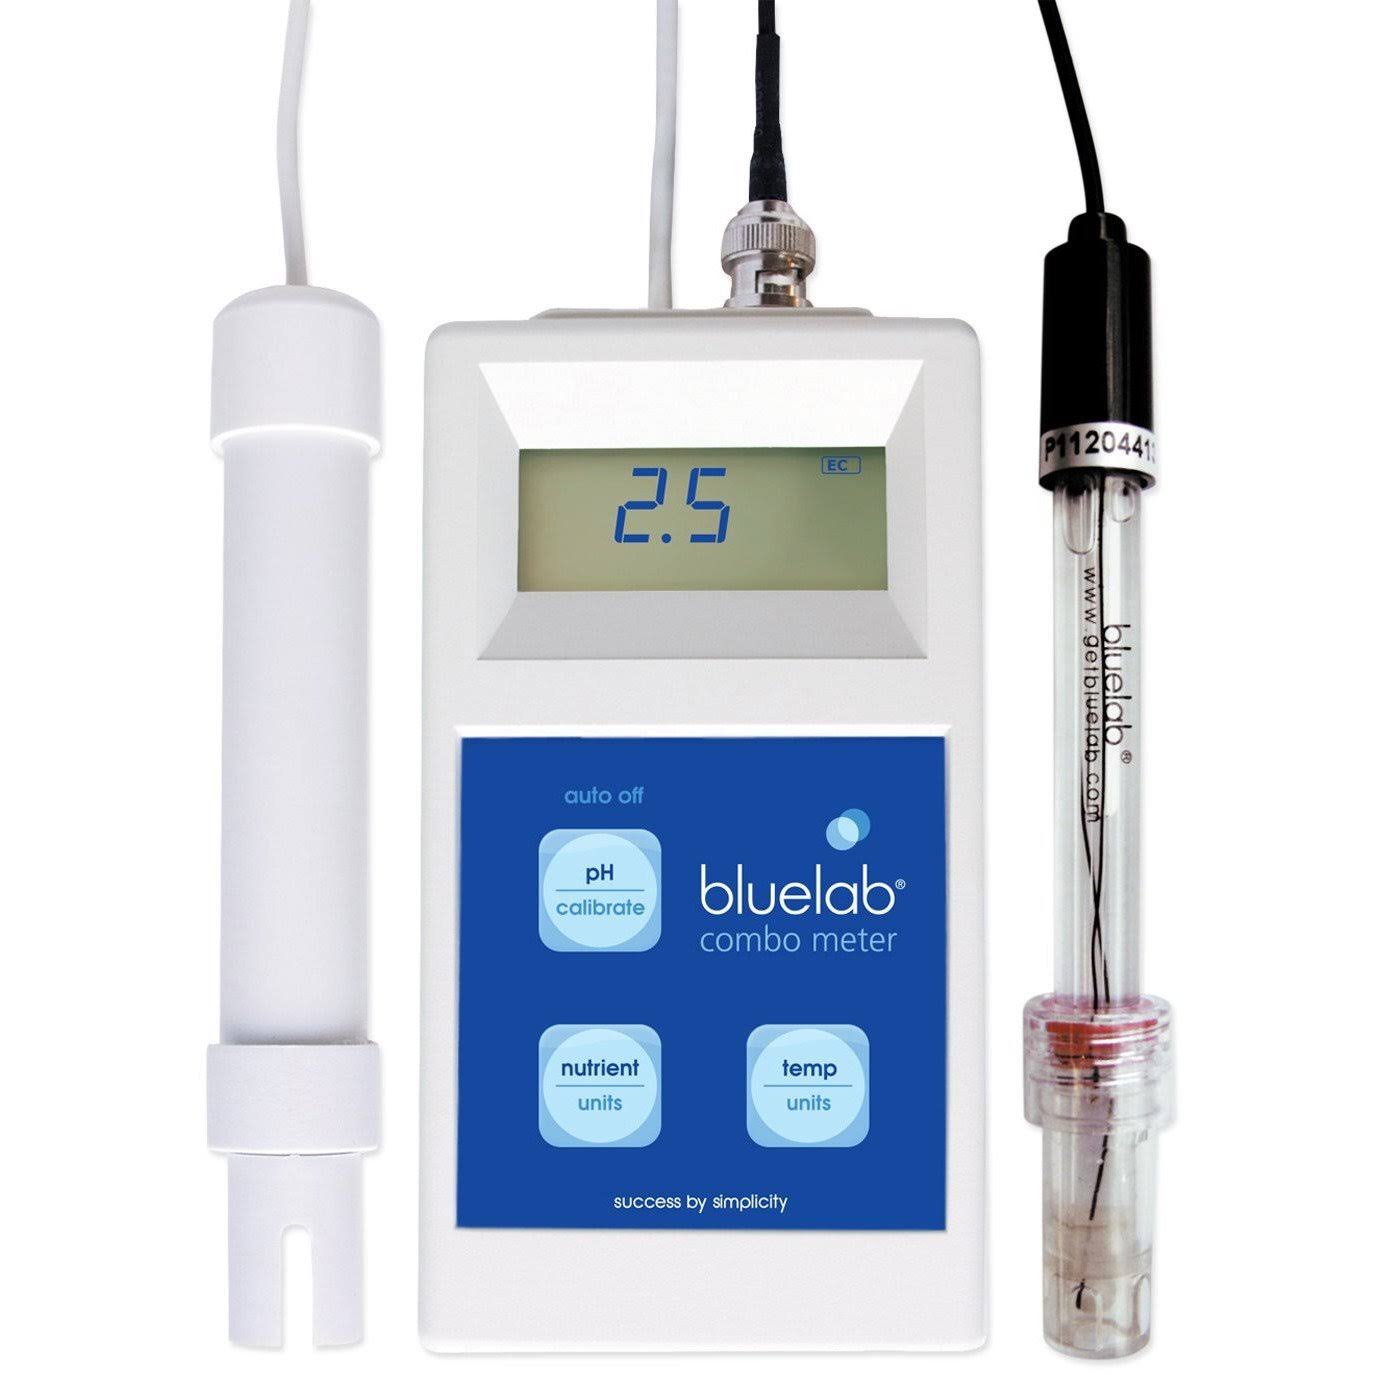 Bluelab Plant Germination Combo Meter